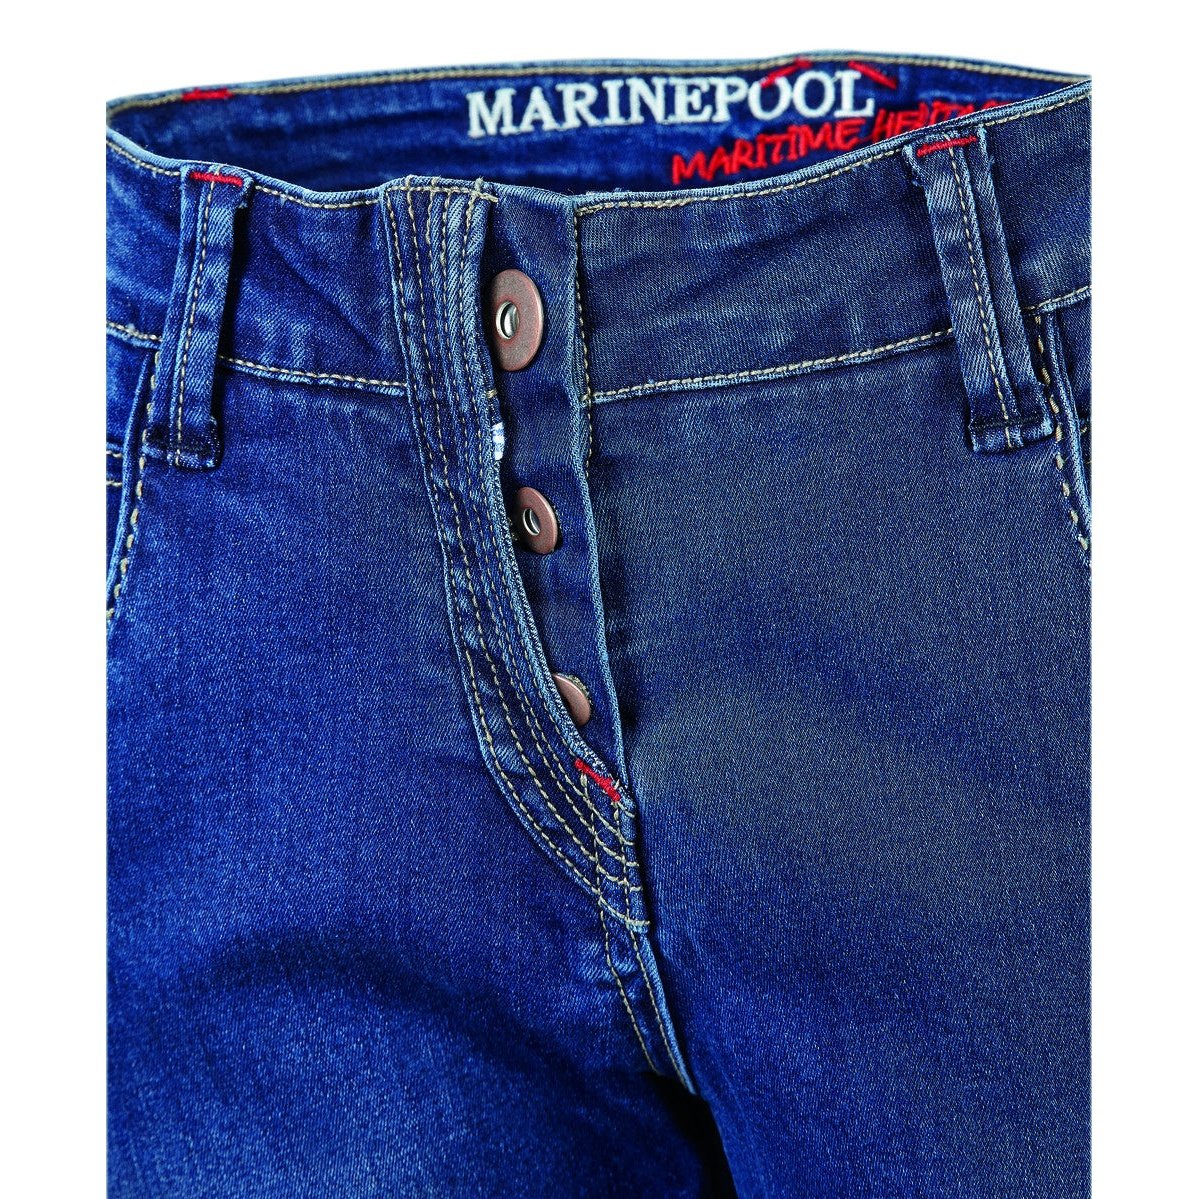 Marinepool Gwen Jeans Women